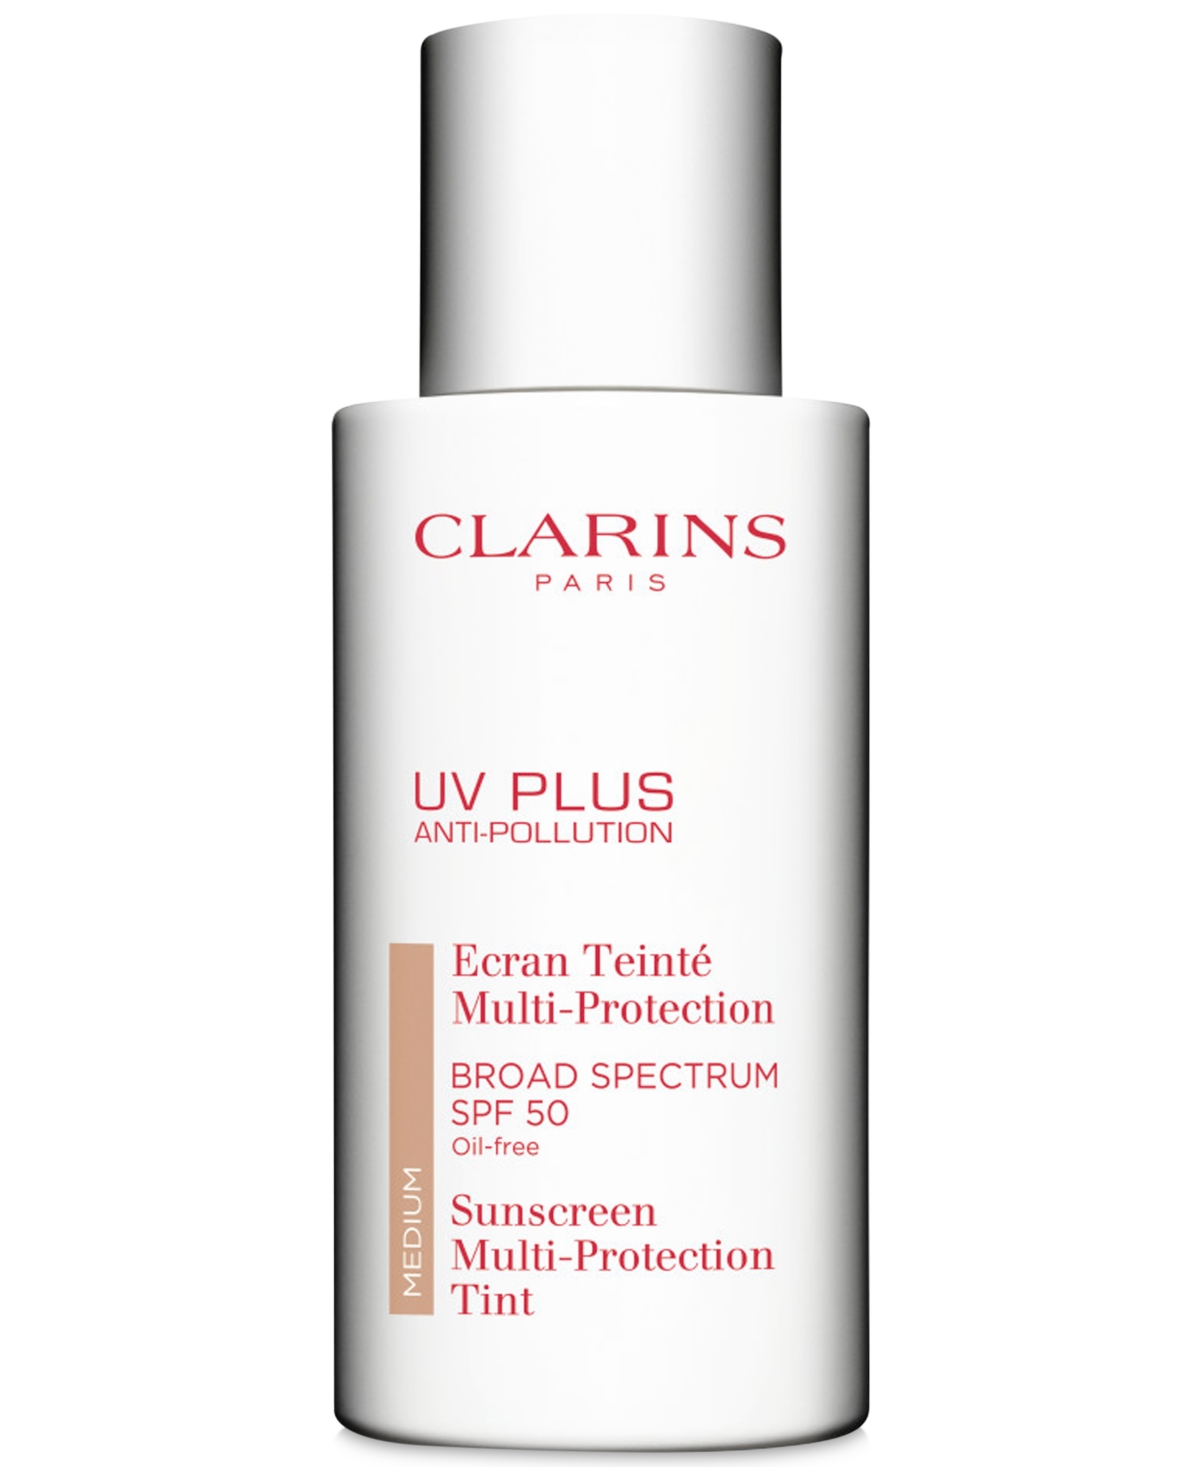 Clarins UV PLUS Anti-Pollution Sunscreen Multi-Protection Tint SPF 50 Medium 1.7 oz